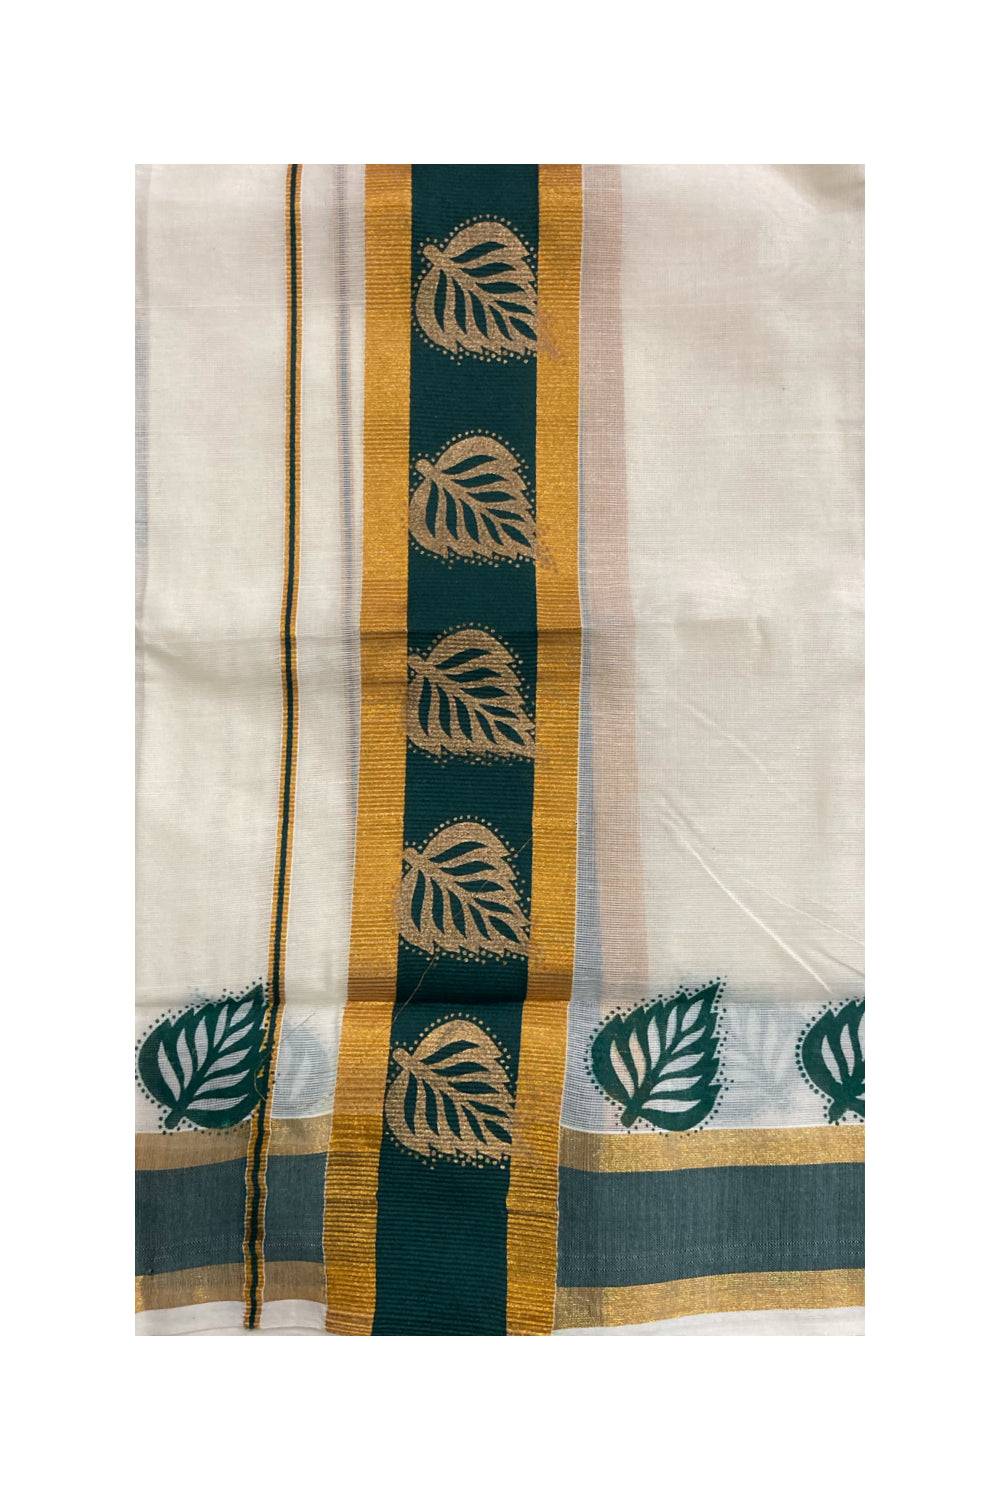 Kerala Cotton Mundum Neriyathum (Set Mundu) with Block Prints on Kasavu and Dark Green Border